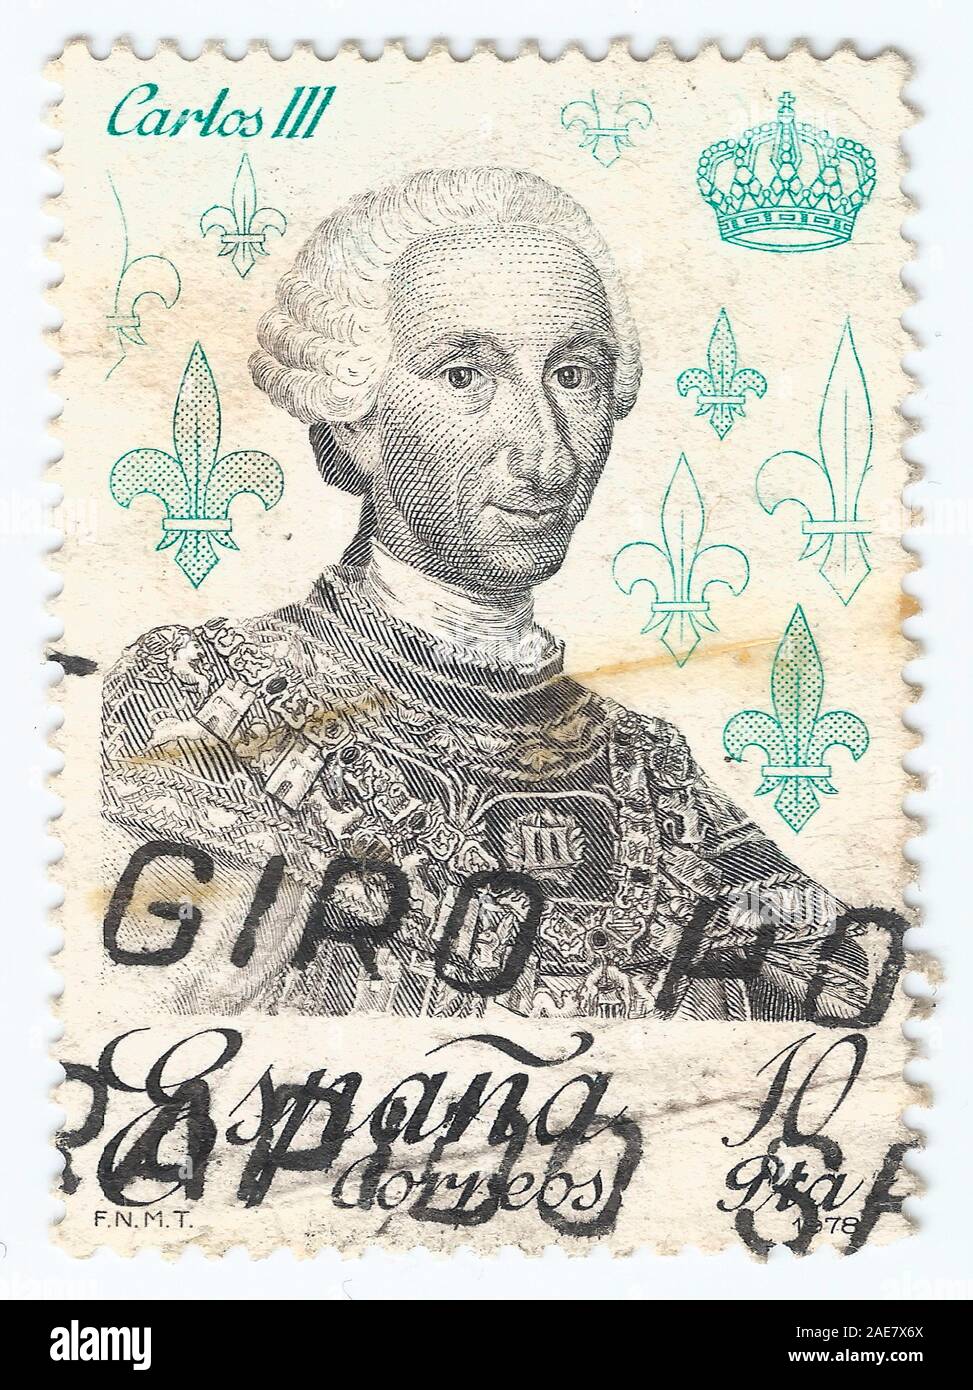 MERIDA, EXTREMADURA, SPAIN - DIC 1, 2018: A stamp printed in Spain shows King Carlos III  (1.716 - 1.788) Printed circa 1978 Stock Photo